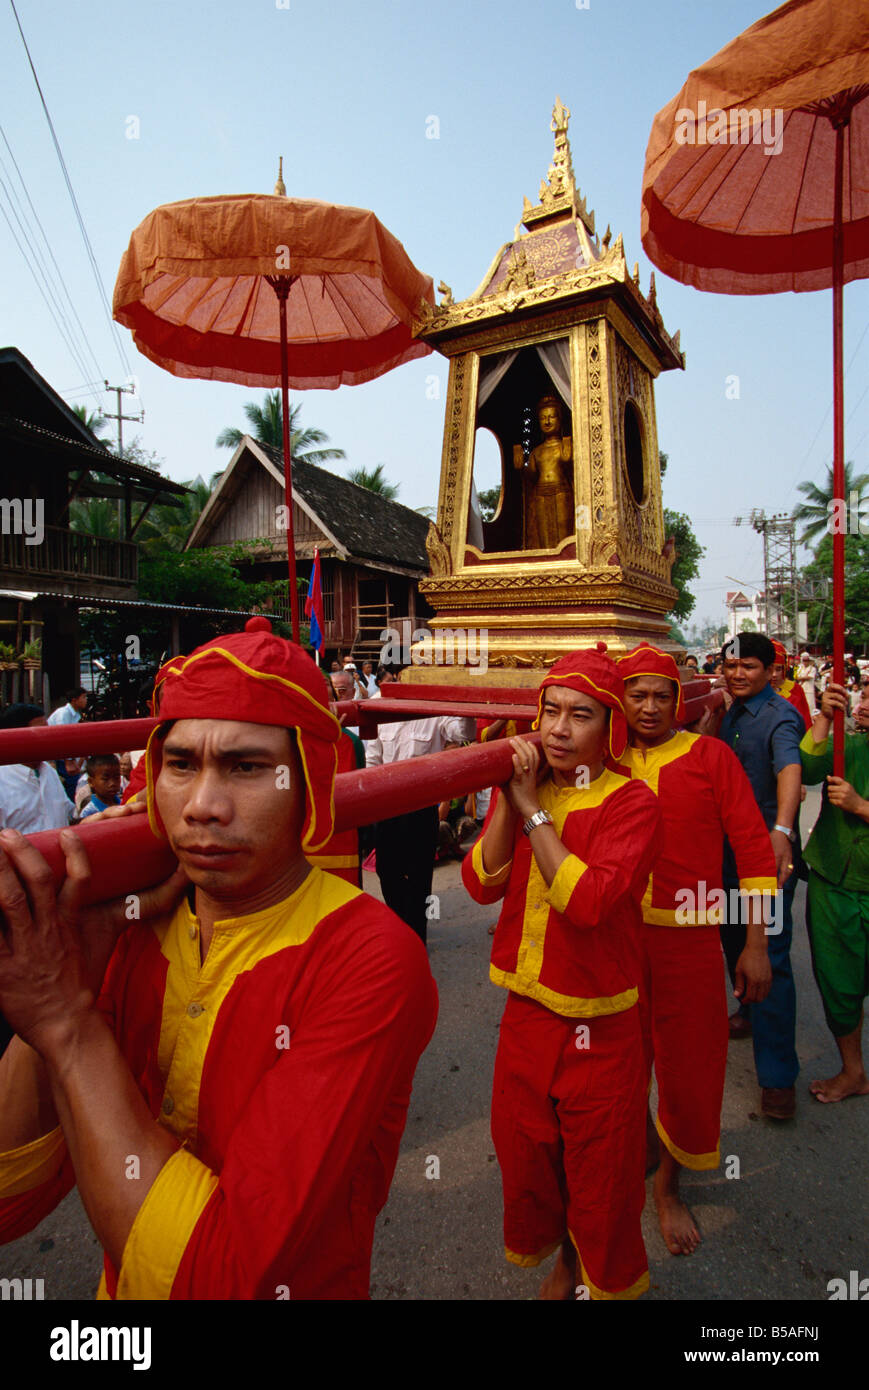 Buddha Phra Bang immagine in processione Luang Prabang Laos Indocina Asia del sud-est asiatico Foto Stock